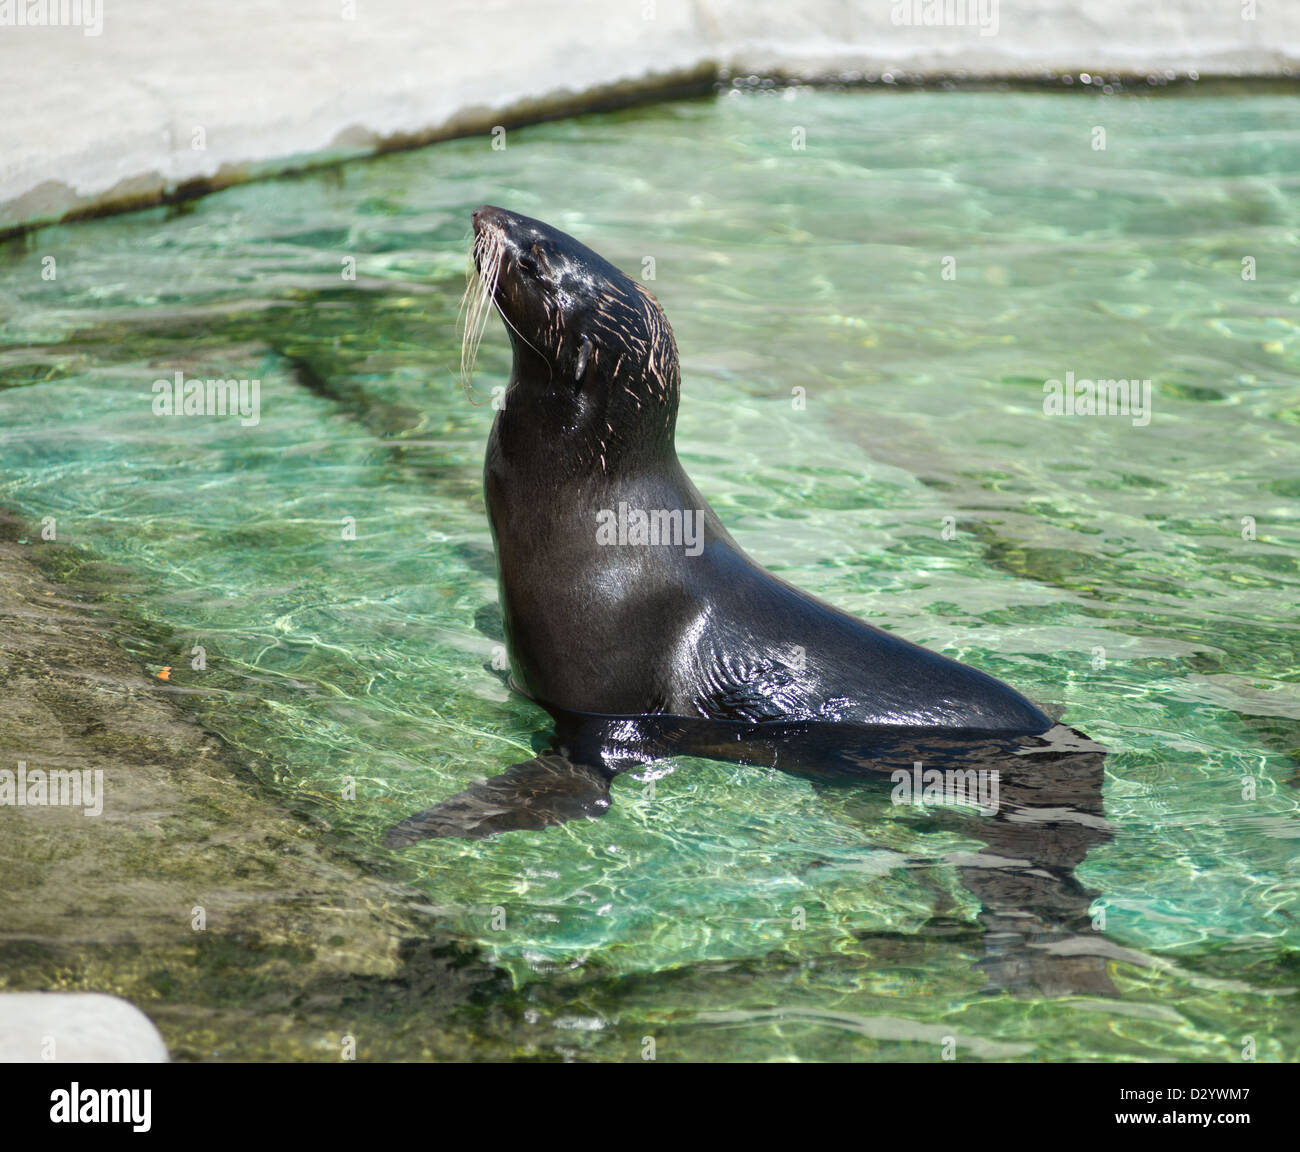 Northern fur seal (Callorhinus ursinus) in the water Stock Photo